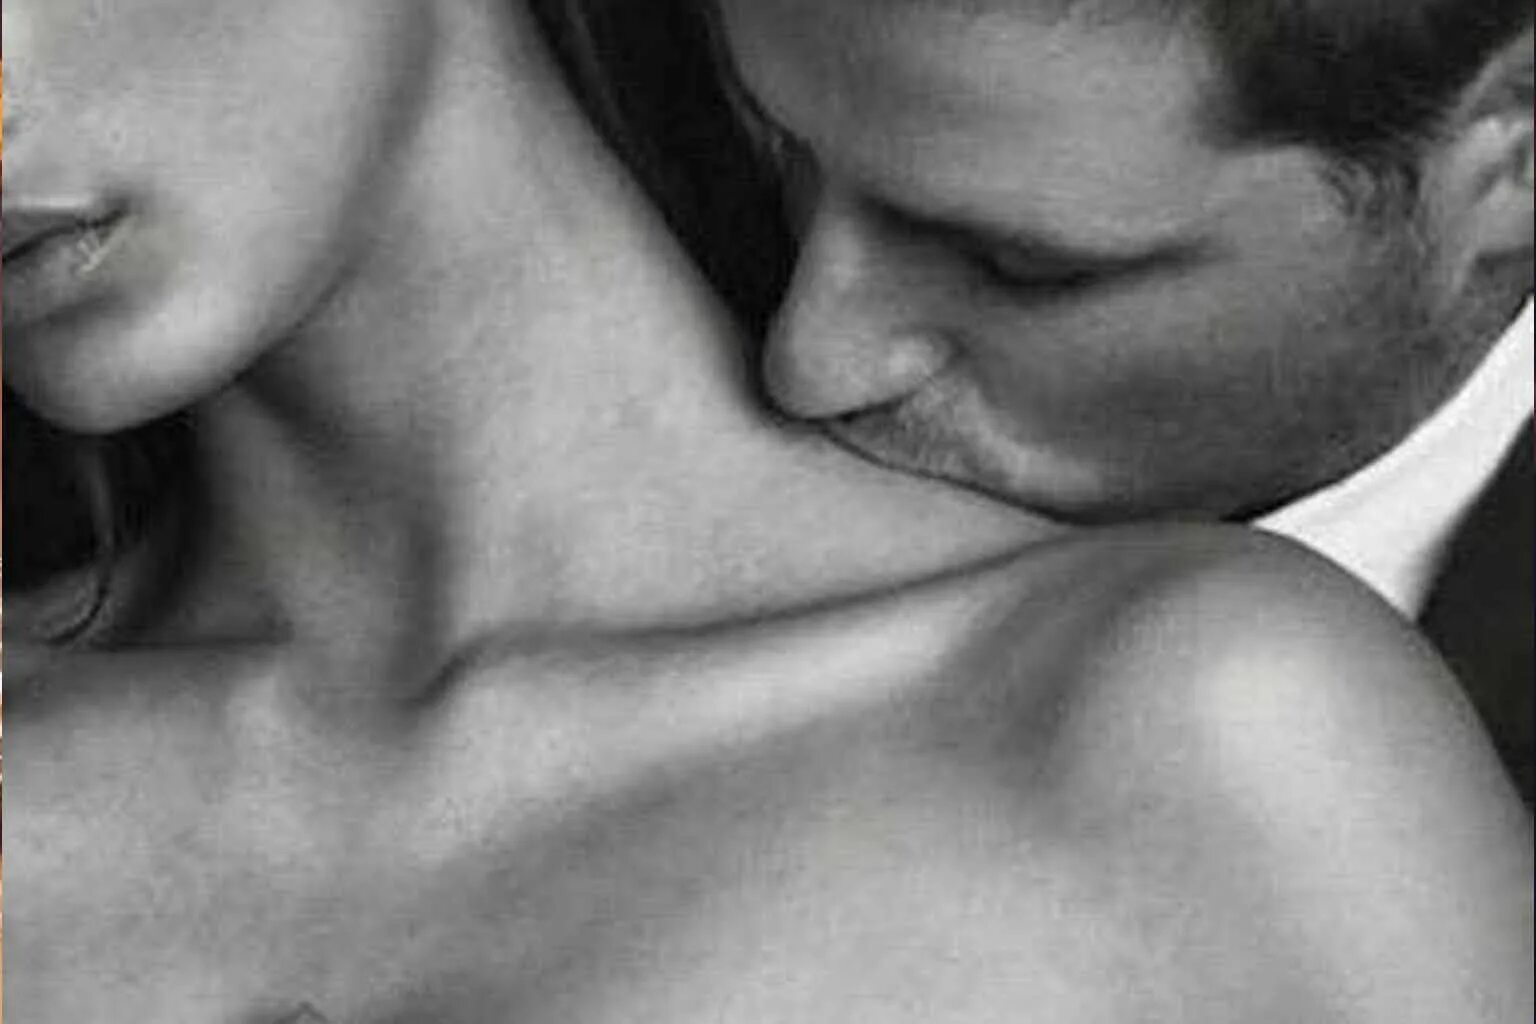 Мужчина целует ласкает. Поцелуй в шею. Поцелуй в плечо. Нежный поцелуй в шею. Нежный поцелуй в плечо.